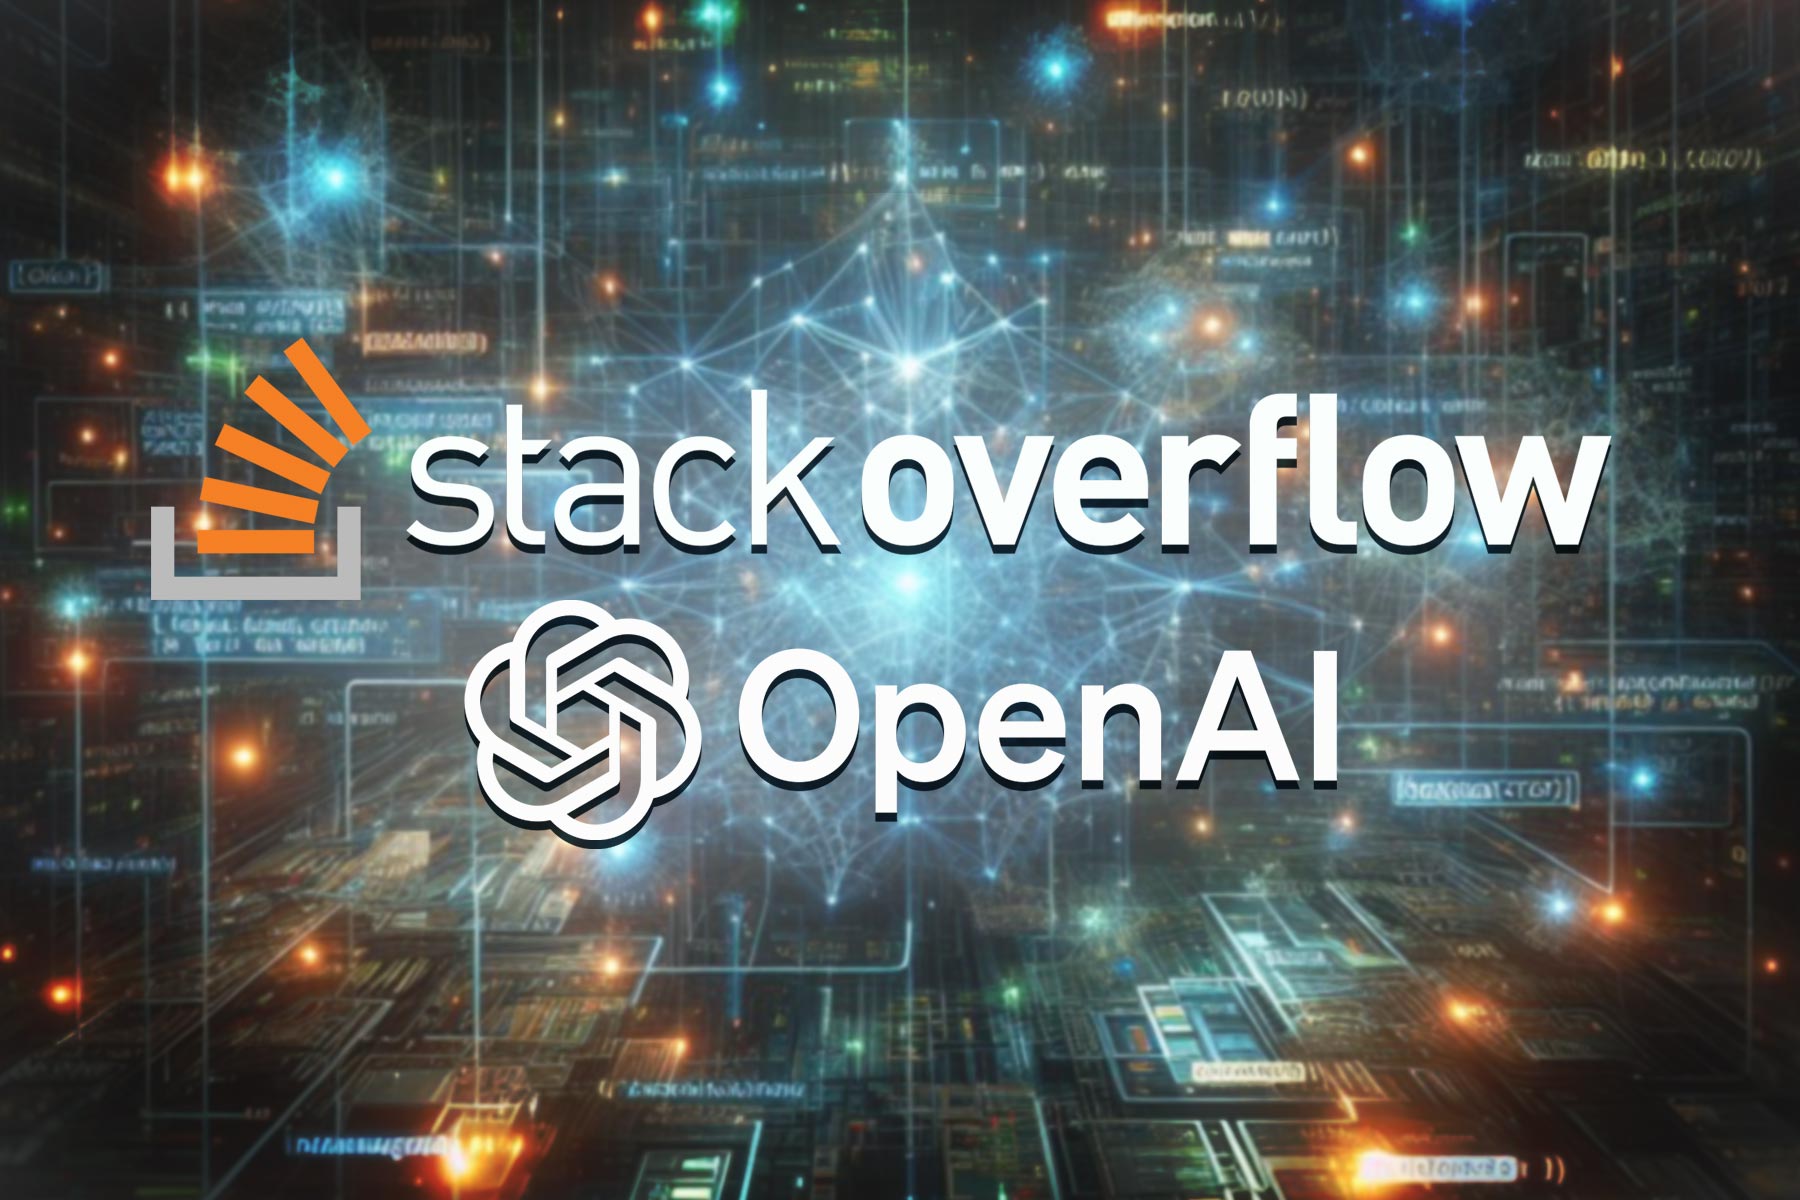 stack overflow openai